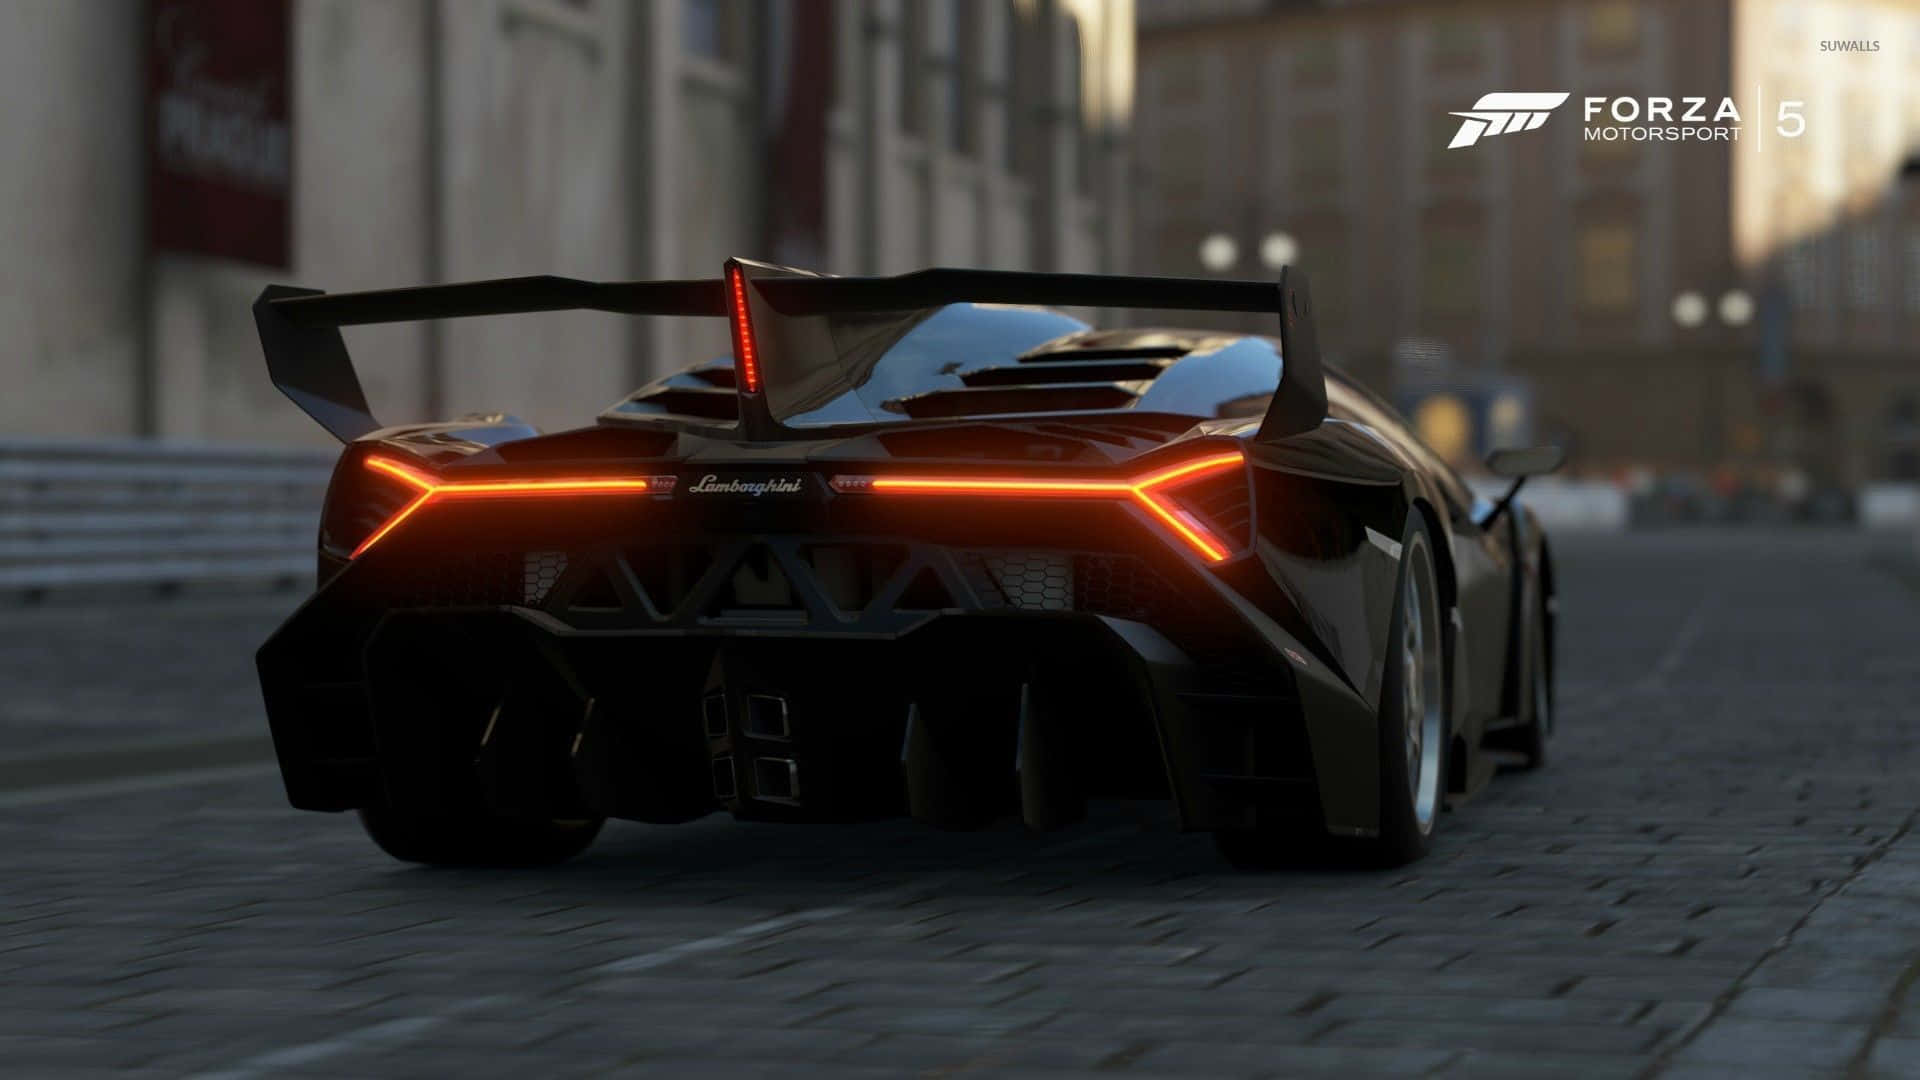 3D Live Wallpaper: Nyd Forza Motorsport 5 Lamborghini Veneno 3D Live Wallpaper. Wallpaper